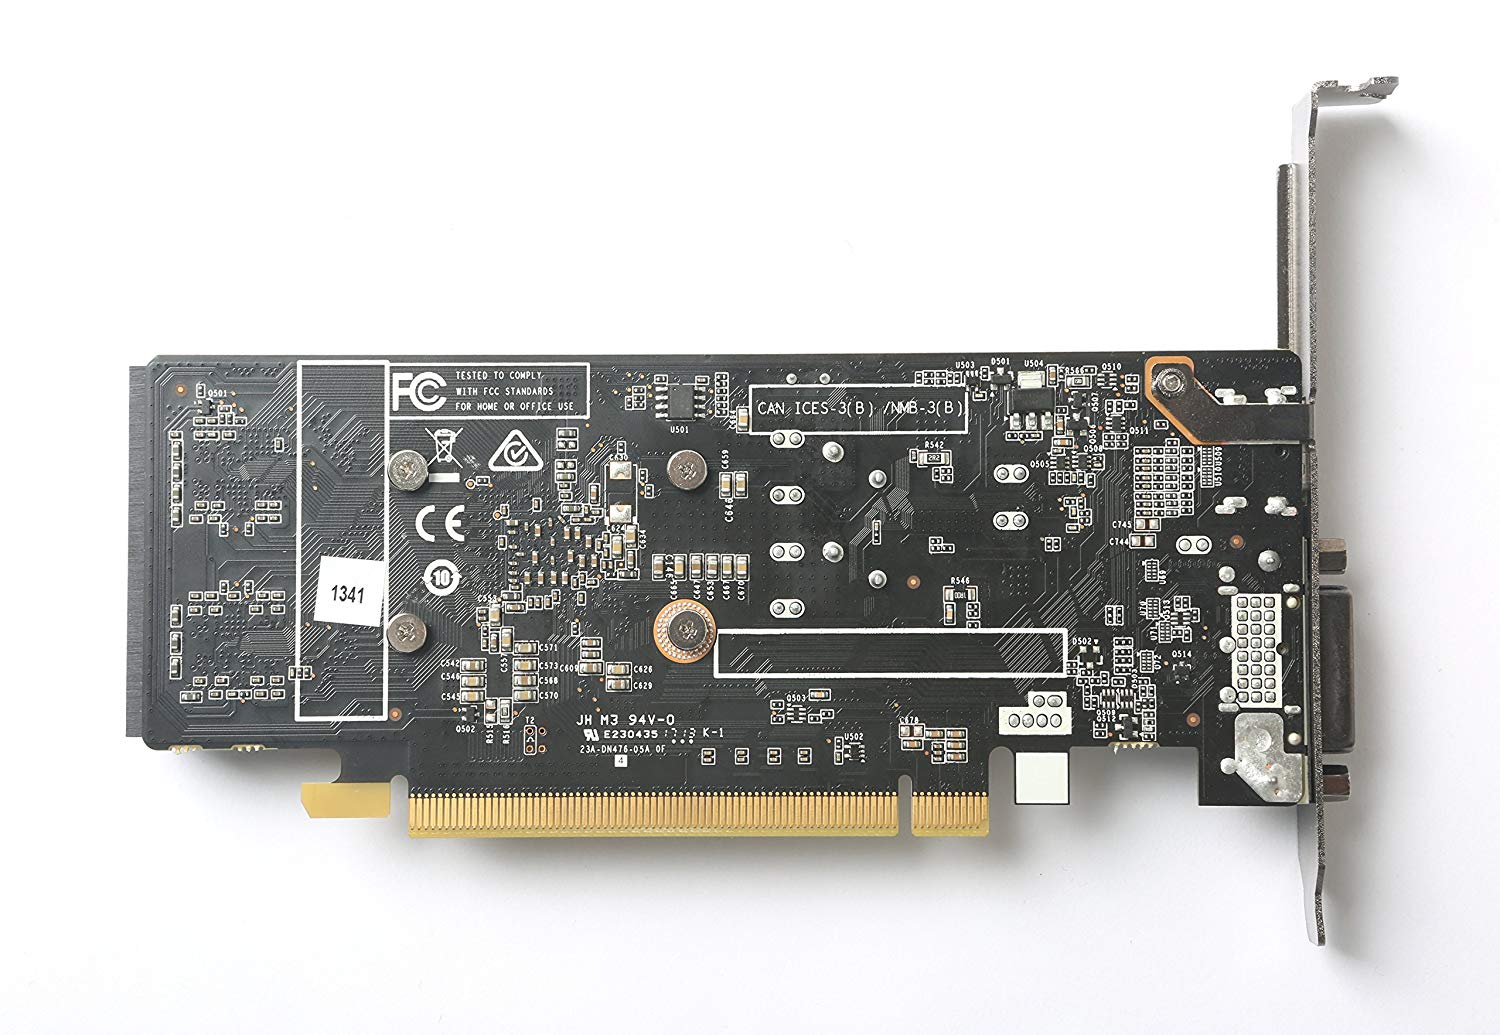 کارت گرافیک زوتاک مدل GeForce GT 1030 2GB GDDR5